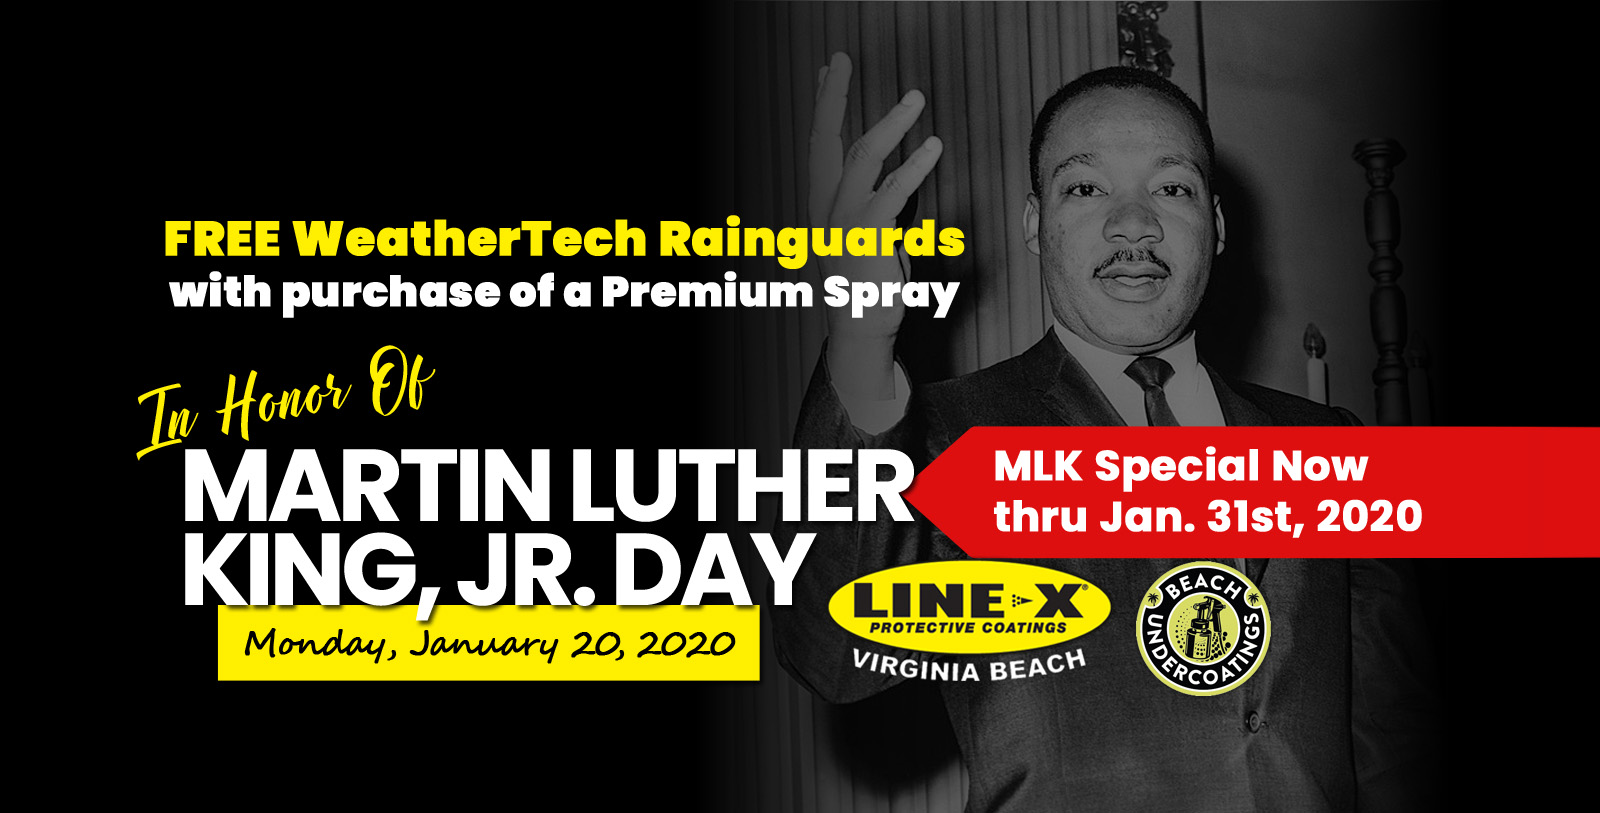 MLK Sale 2020: FREE WeatherTech Rainguards with Purchase of Premium Line-X Spray